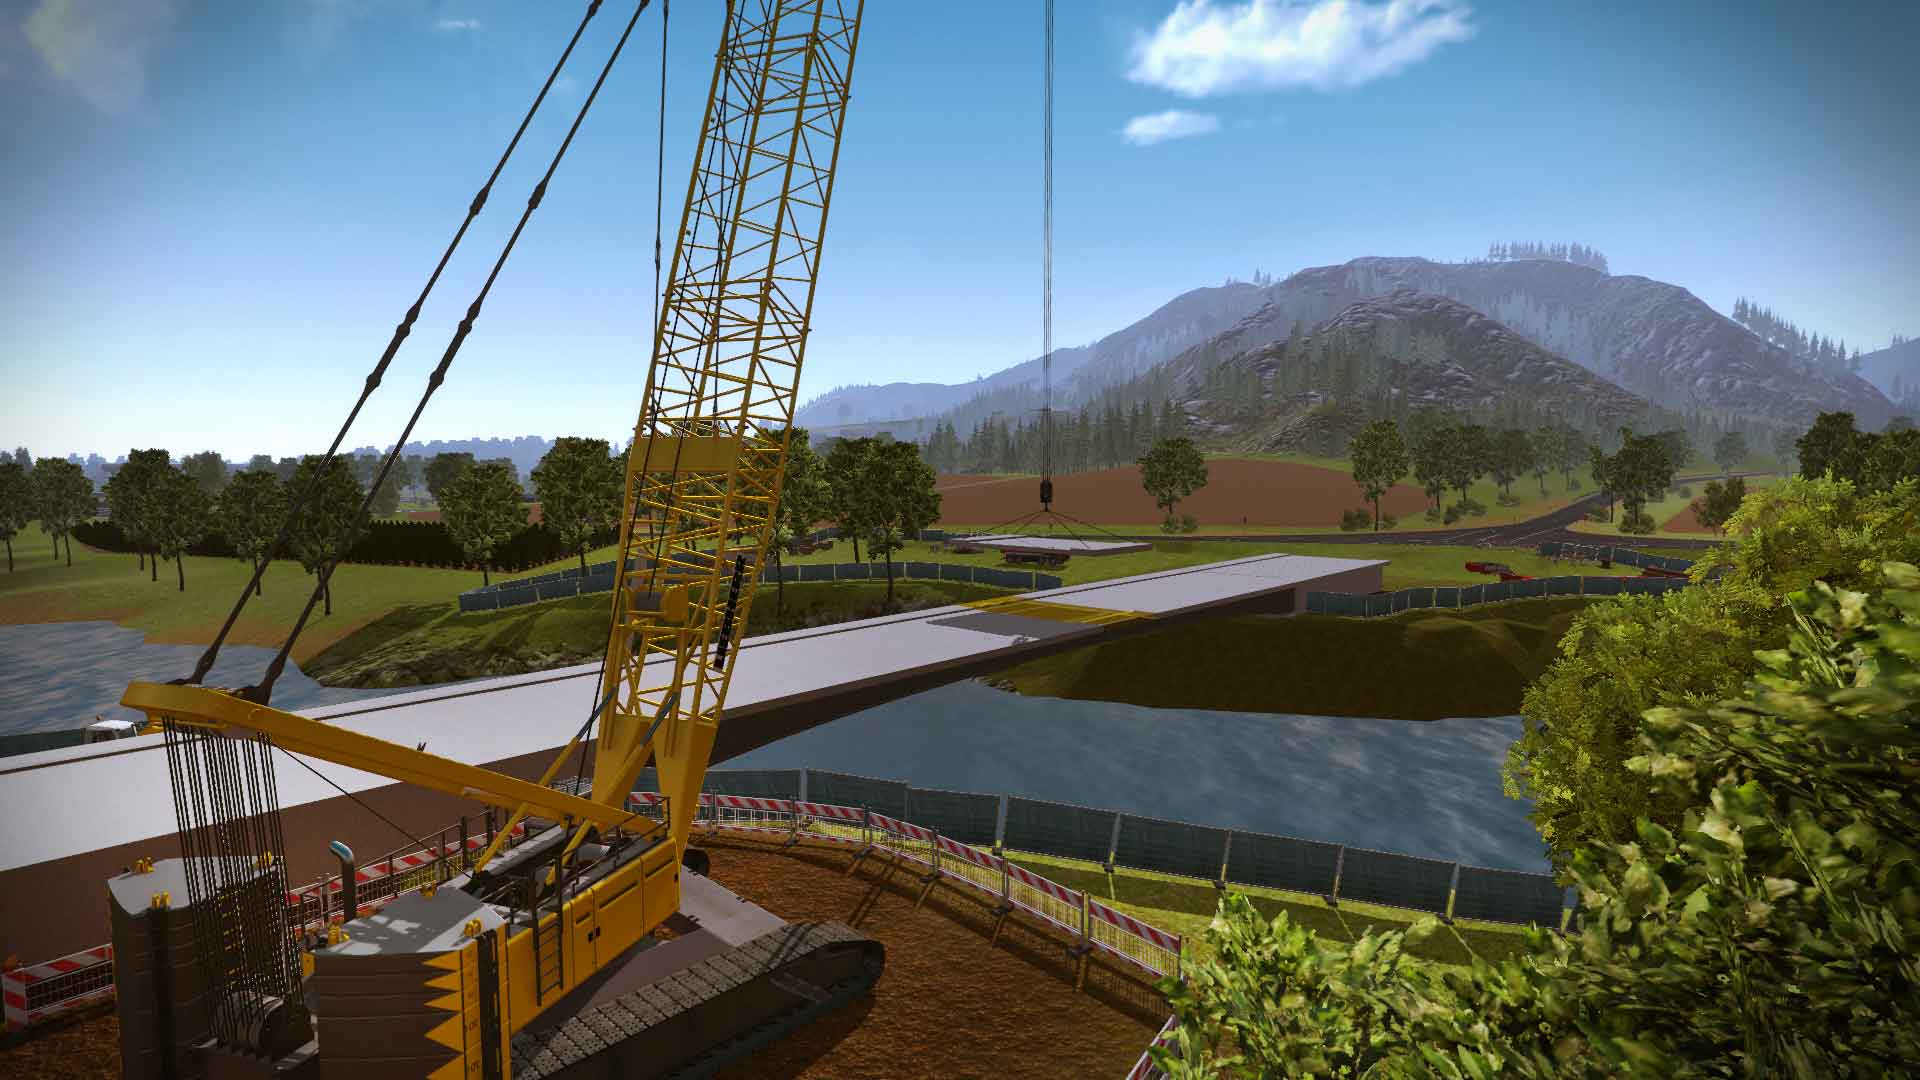 construction simulator 2015 download free full version pc